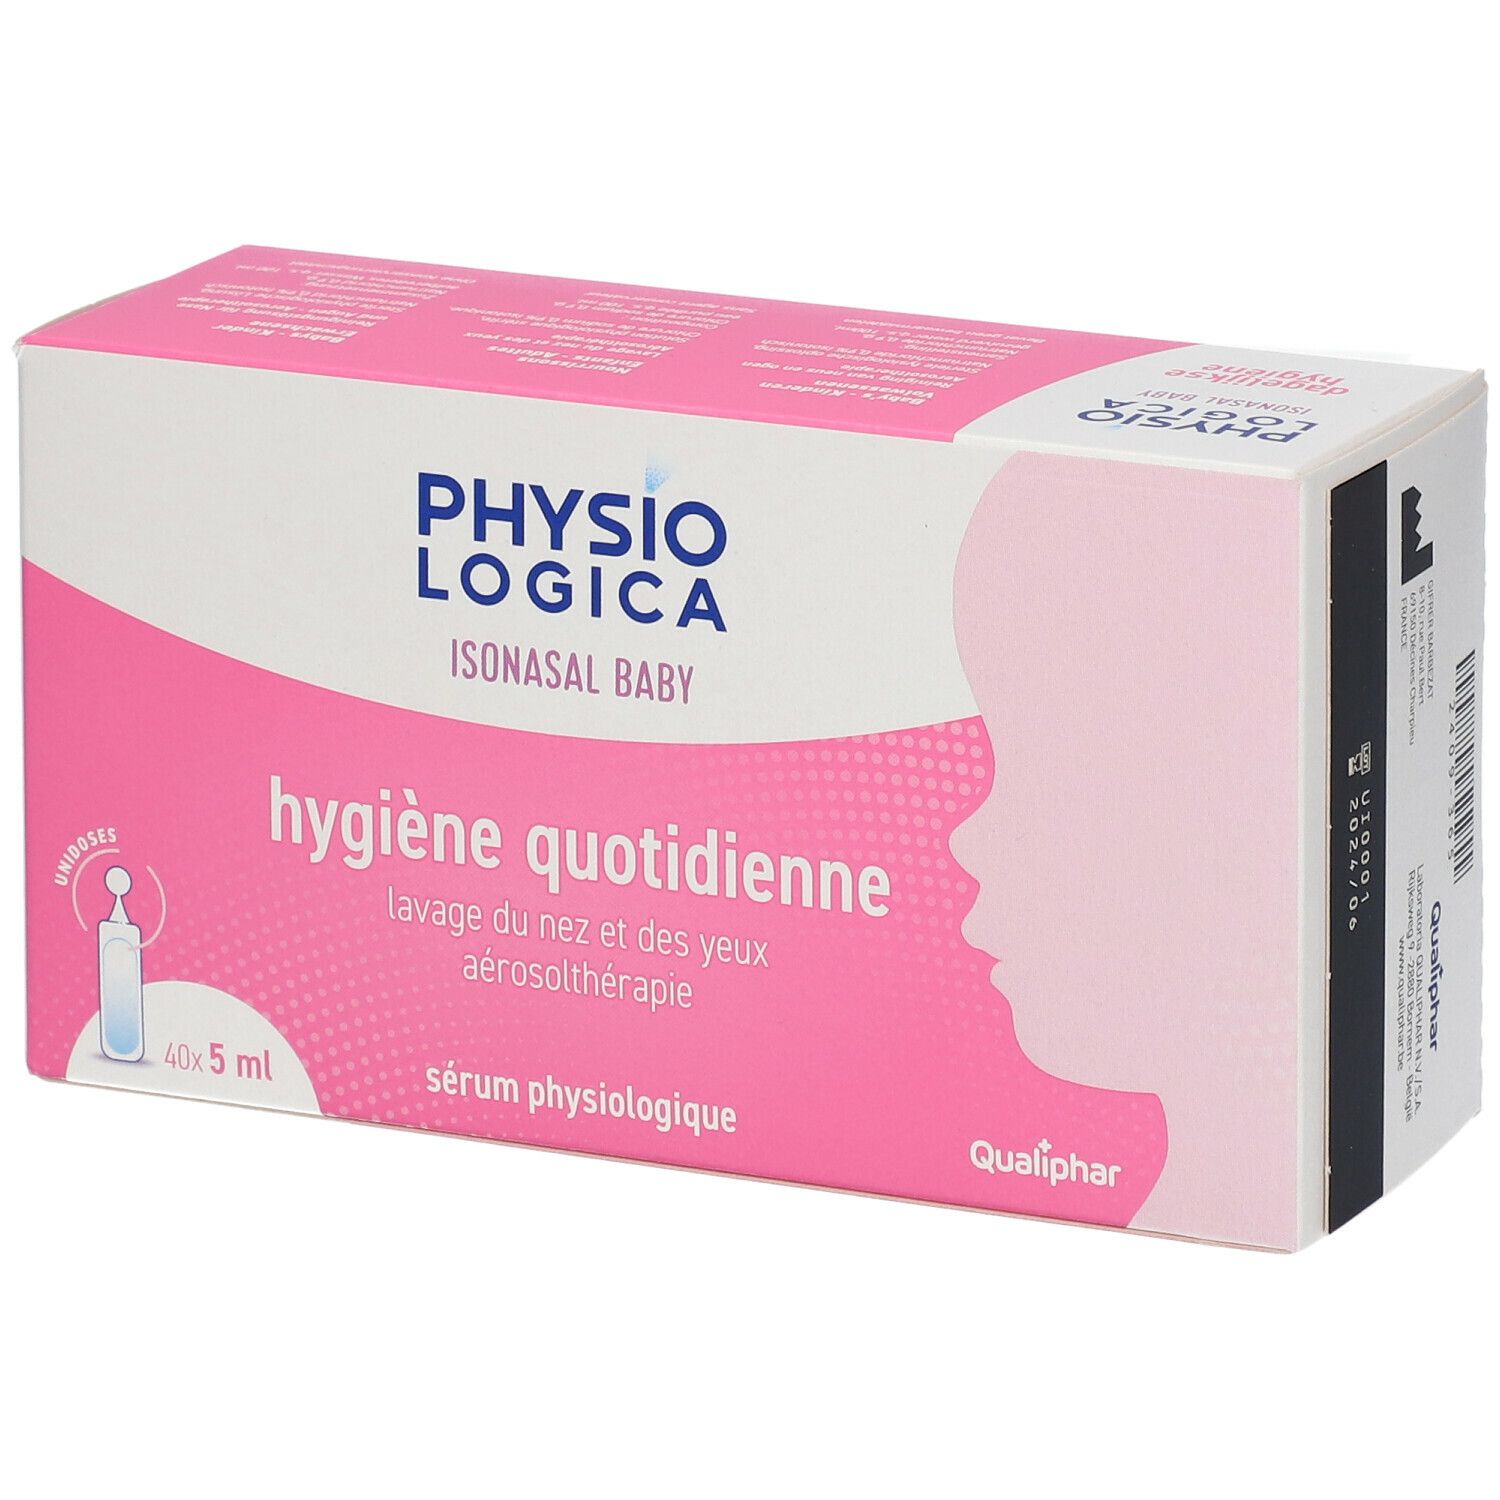 Physiodose Sérum physiologique Nez & Yeux 45x5 ml - Redcare Pharmacie